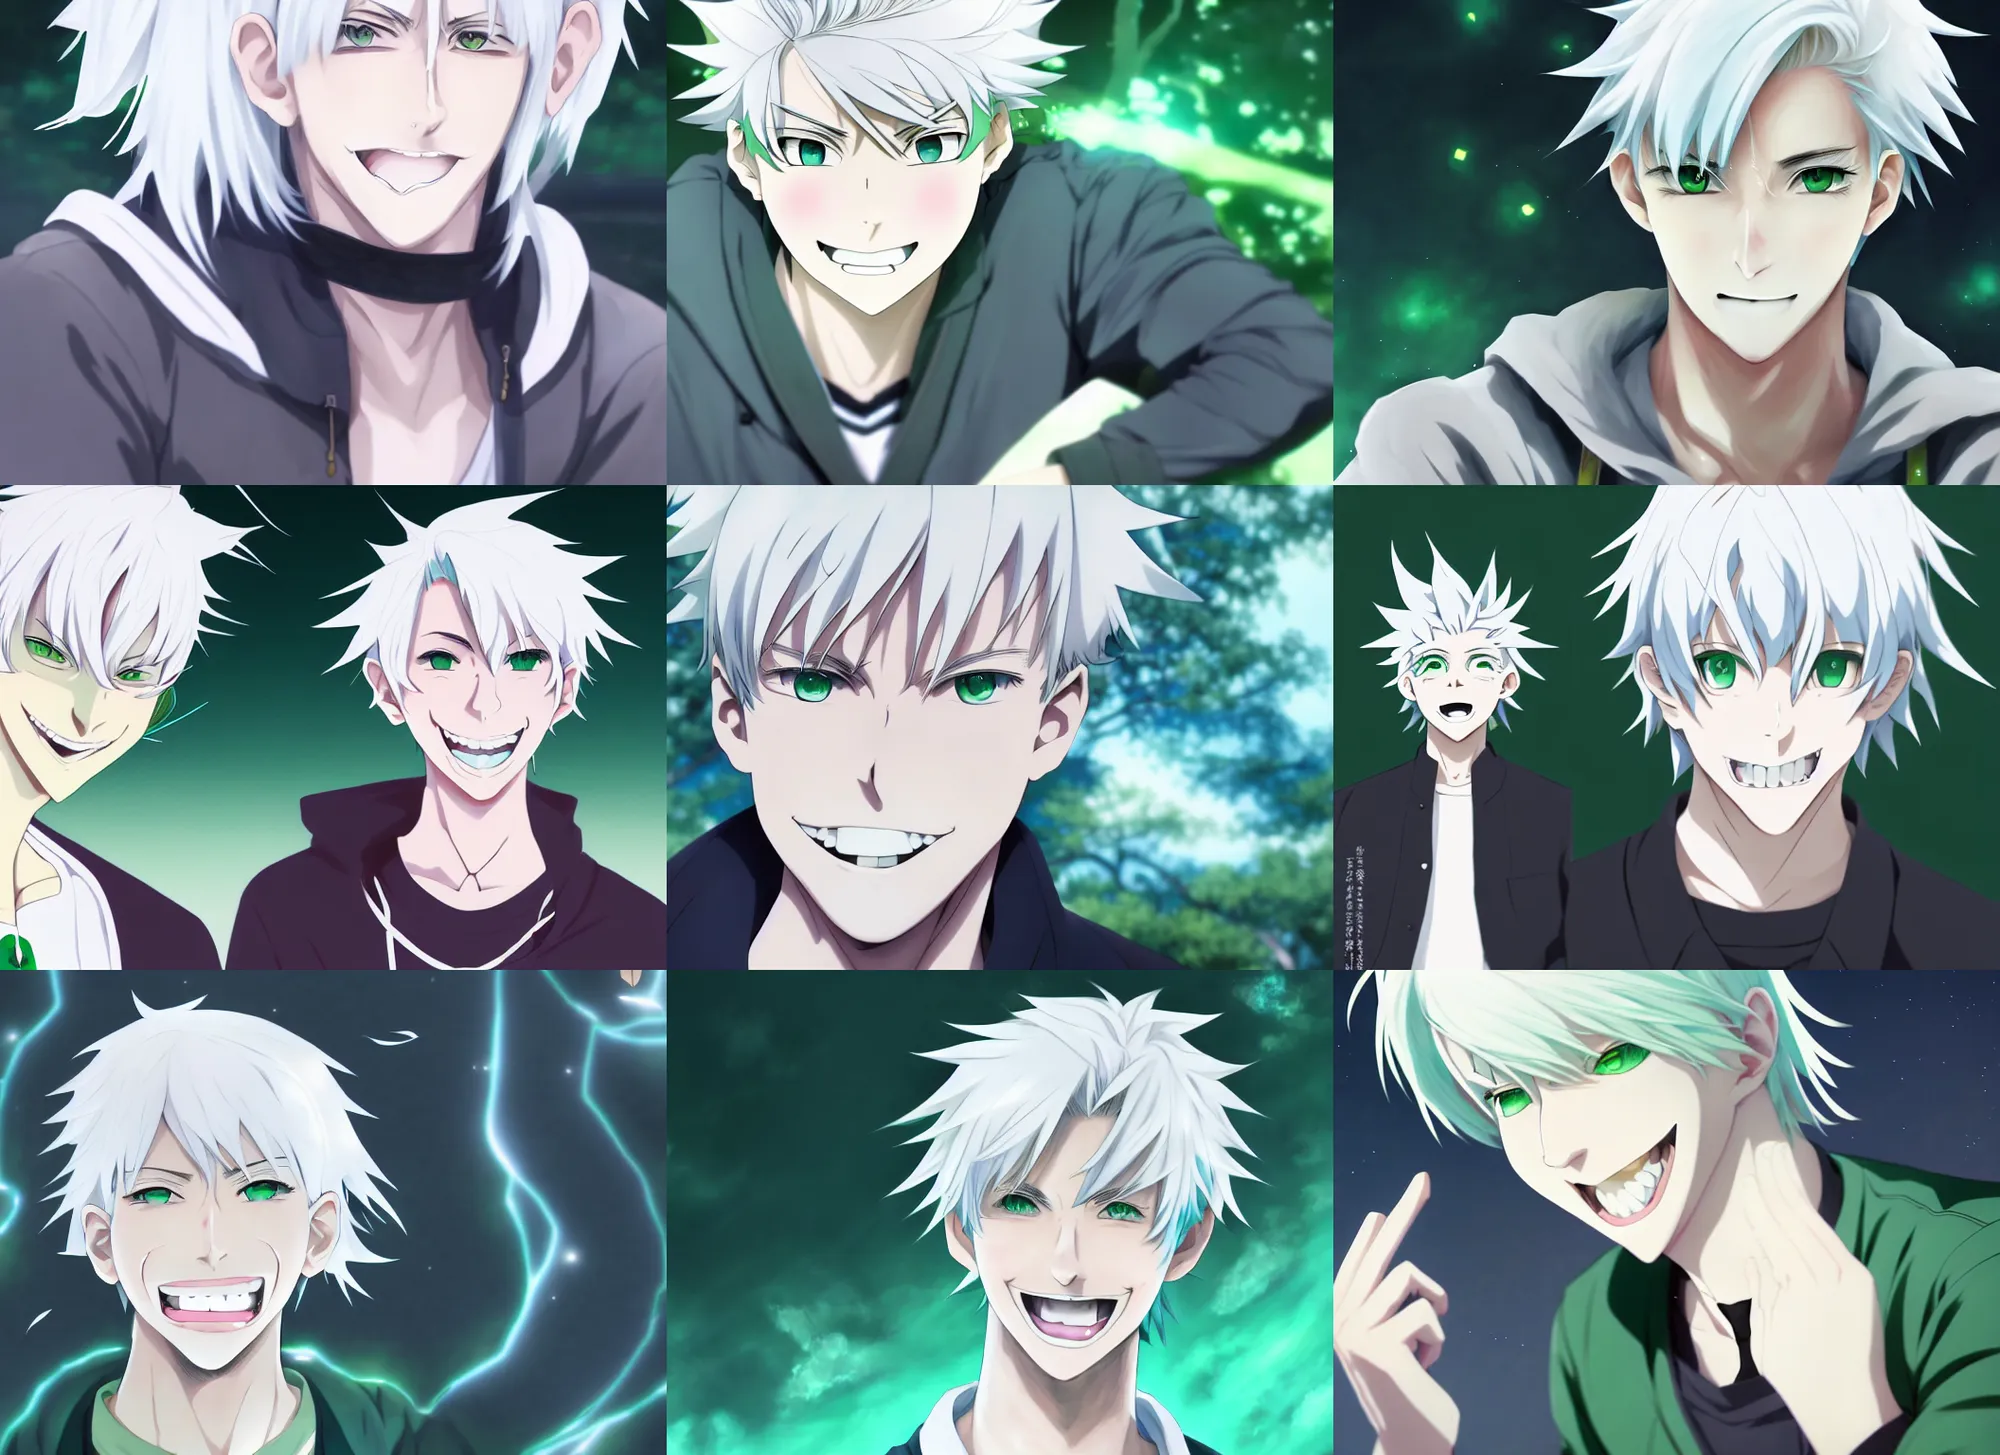 Prompt: white haired young guy with green eyes, laughing, beautiful anime portrait, symmetry, ecchi style, makoto shinkai, genshin impact, high quality, art, long shot